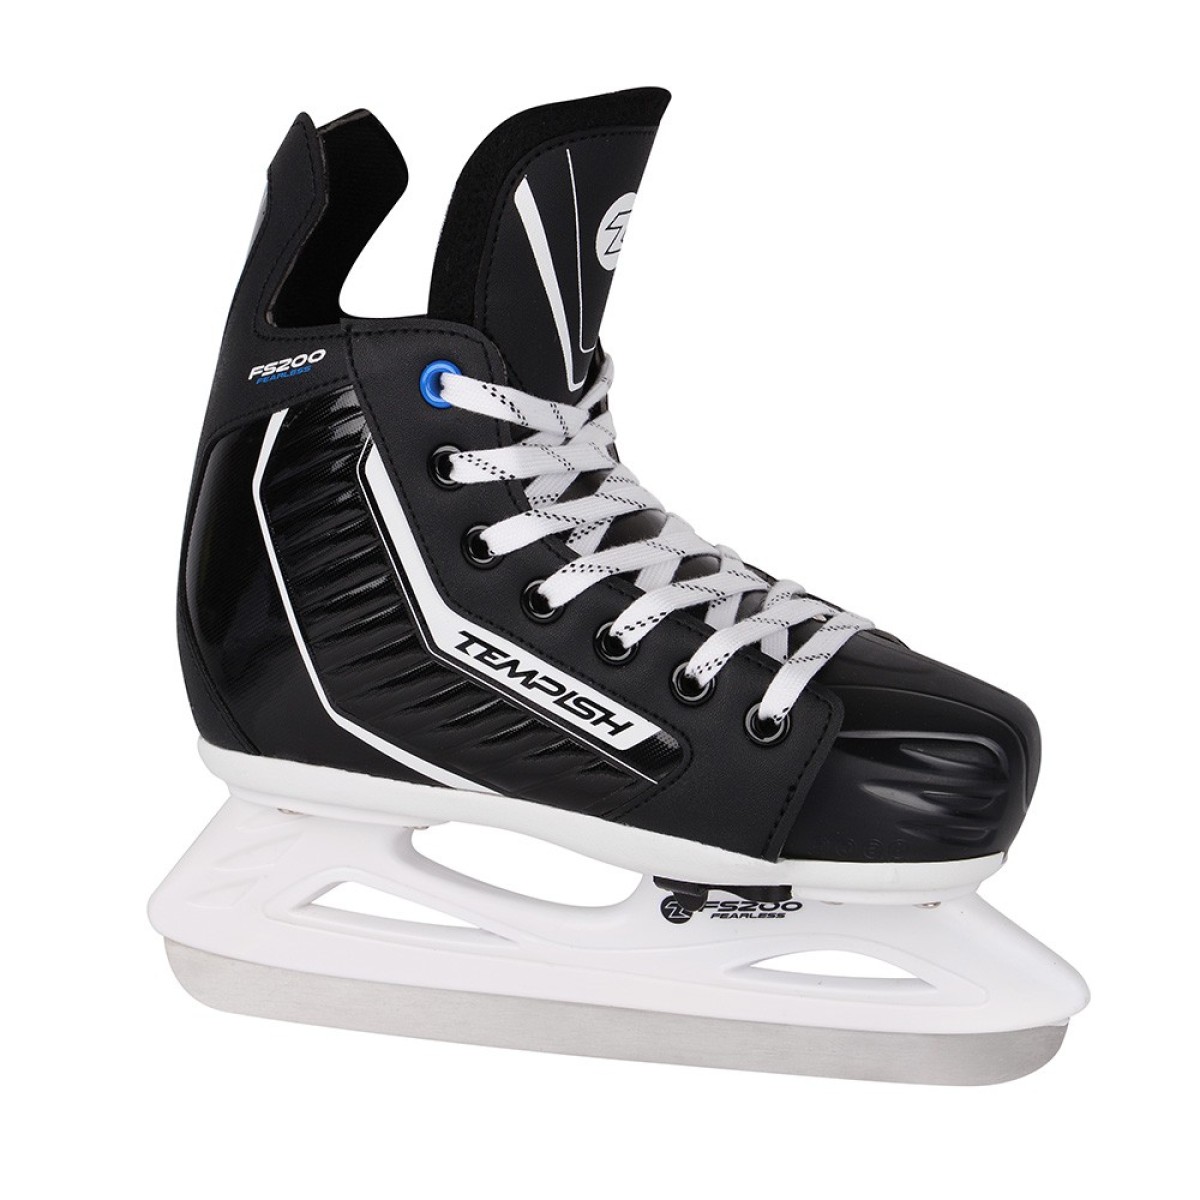 FS 200 adjustable hockey skate TEMPISH - view 1